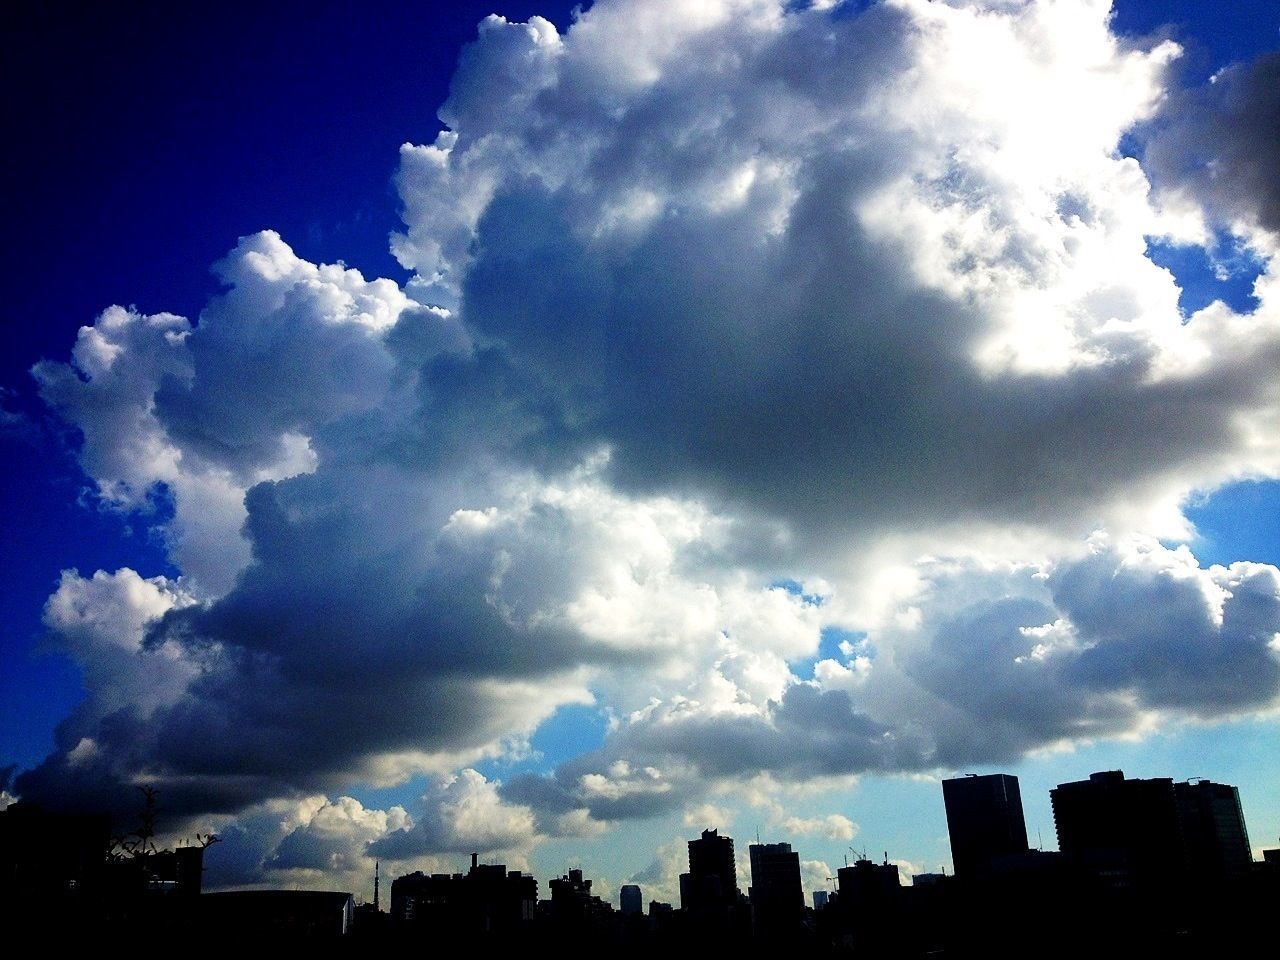 Cloudscape over city